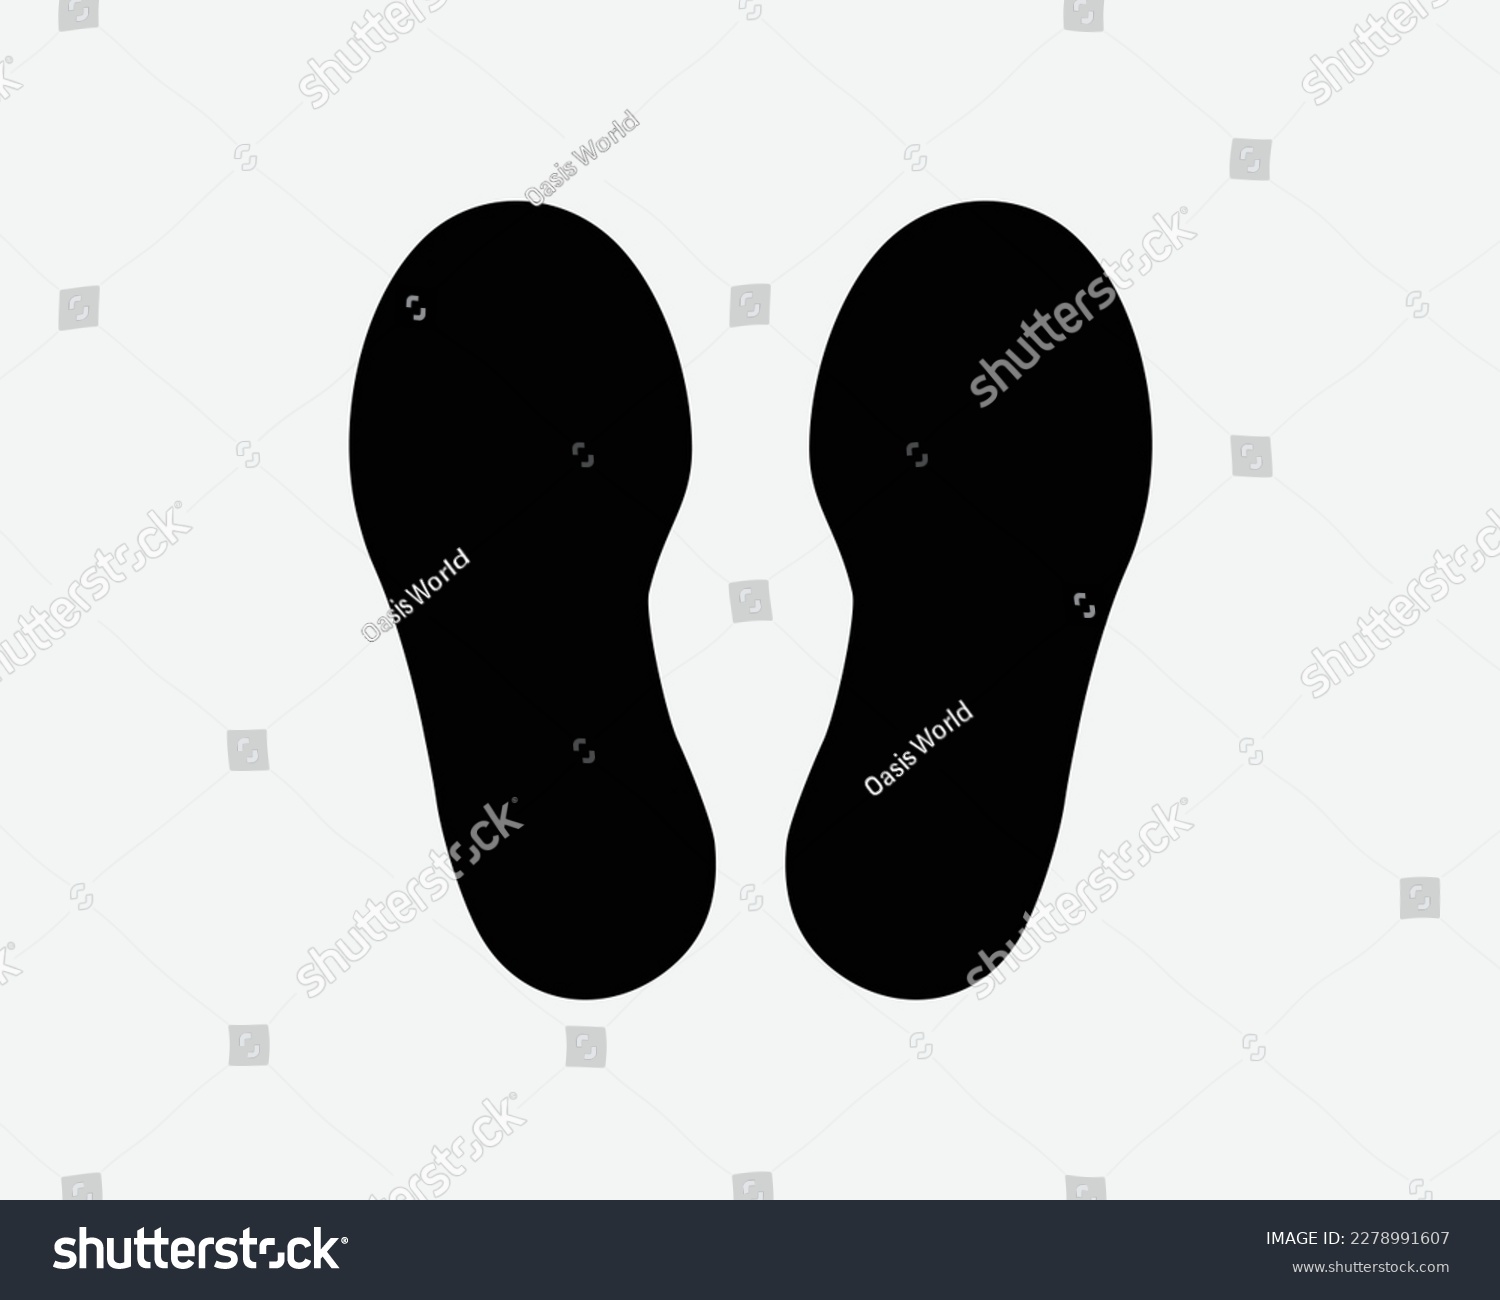 SVG of Footstep Foot Step Footprints Foot Prints Shoes Sole Steps Black White Silhouette Symbol Sign Graphic Clipart Artwork Illustration Pictogram Vector svg